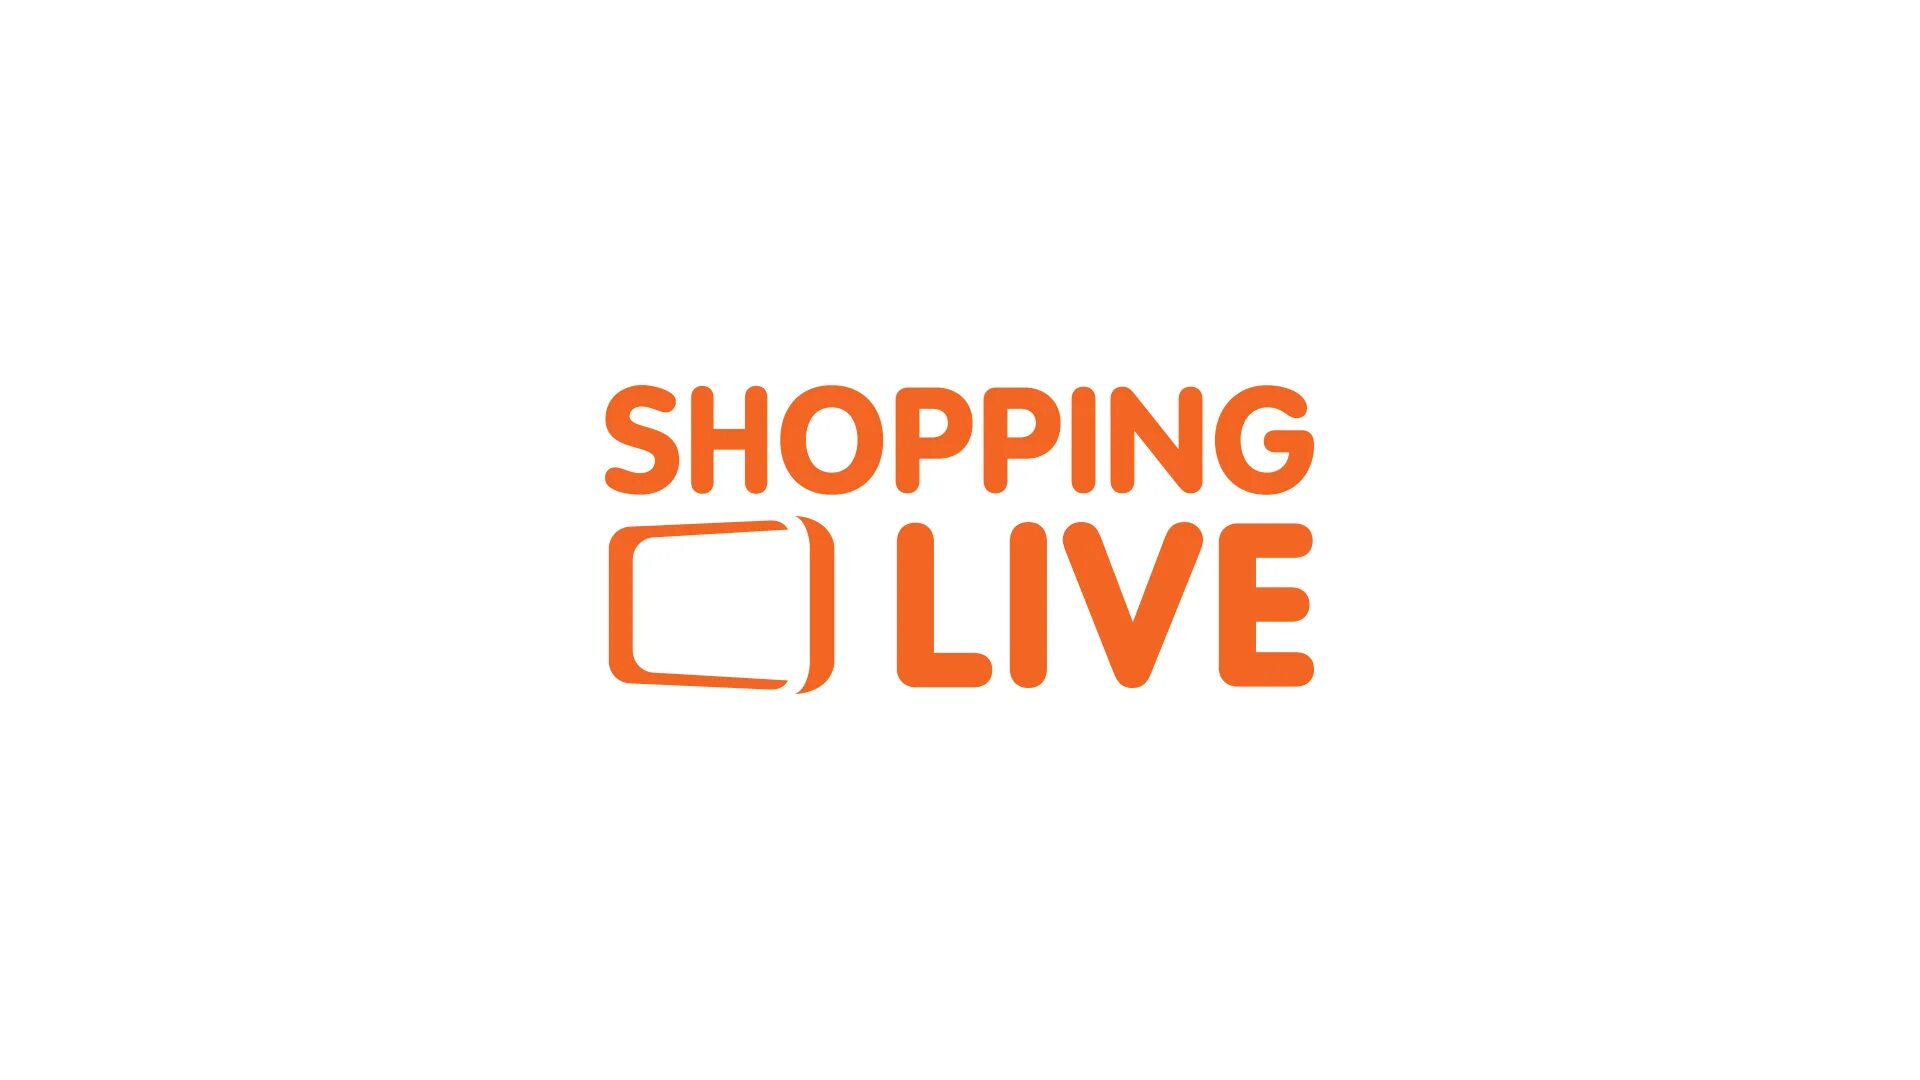 Логотип SHOPPINGLIVE. Телеканал shopping Live. SHOPPINGLIVE.ru интернет магазин. Товары shopping Live. Shops live ru